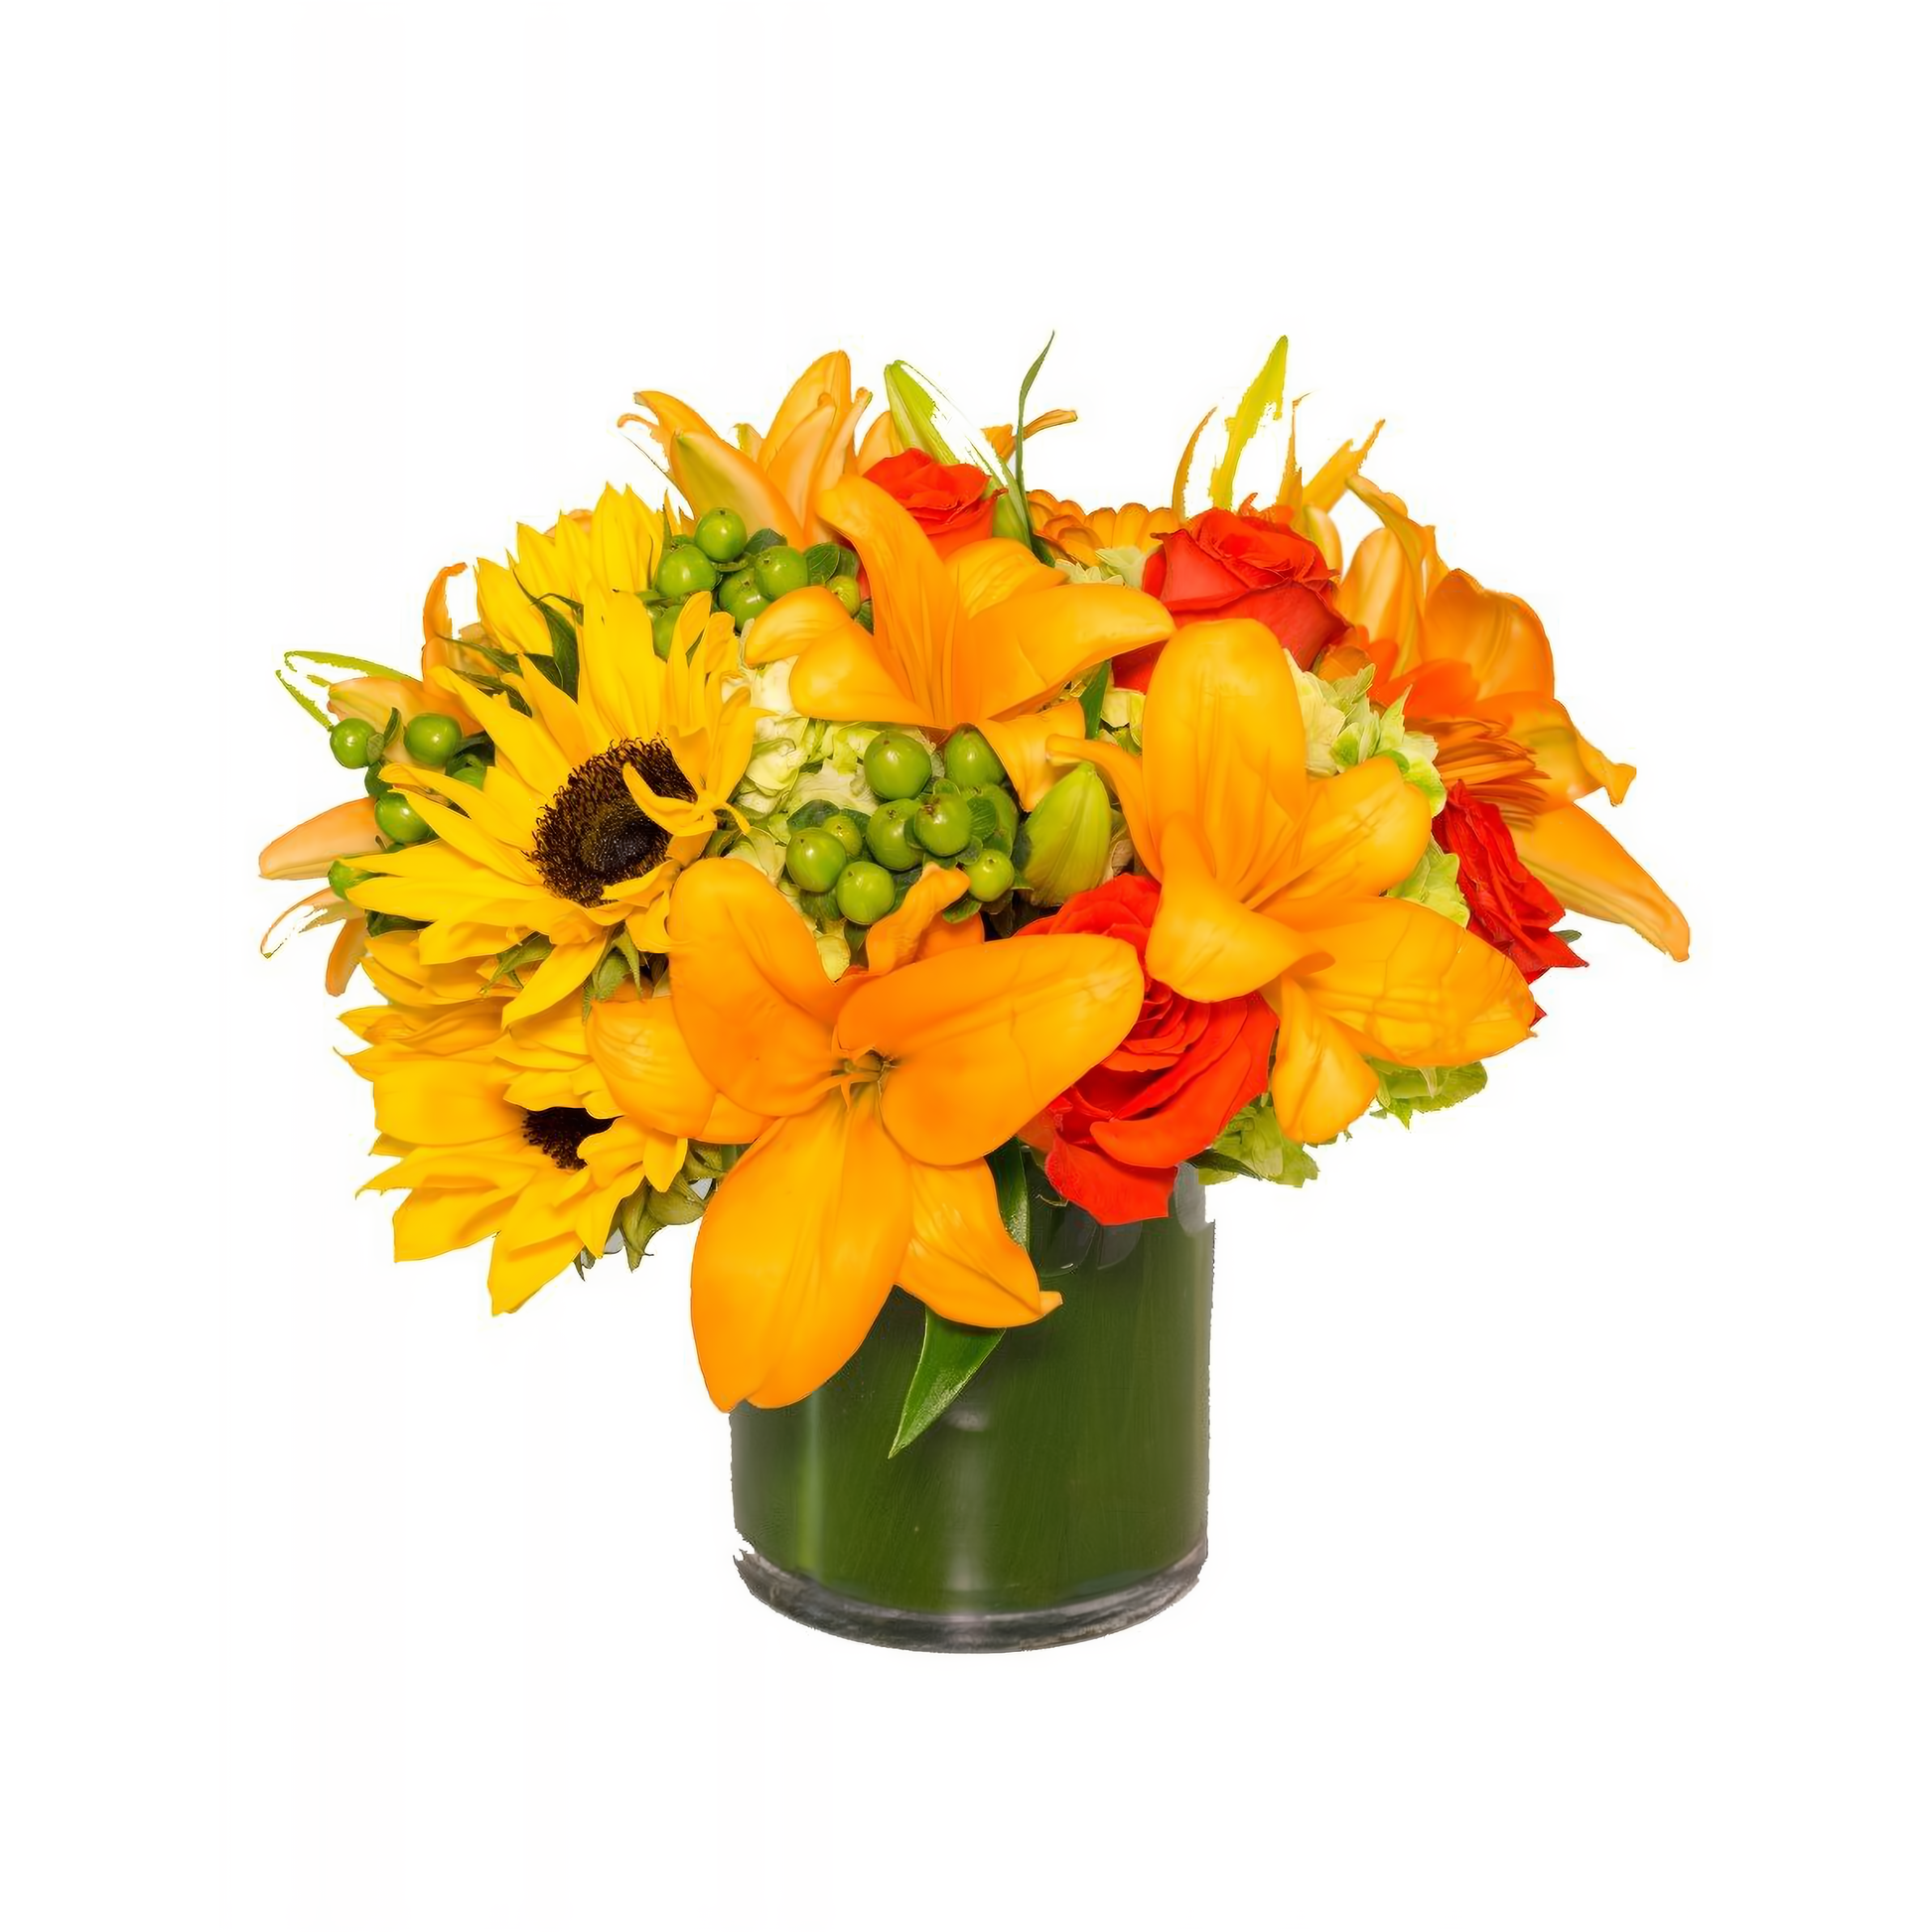 Sunburst Bouquet - Occasions > Anniversary